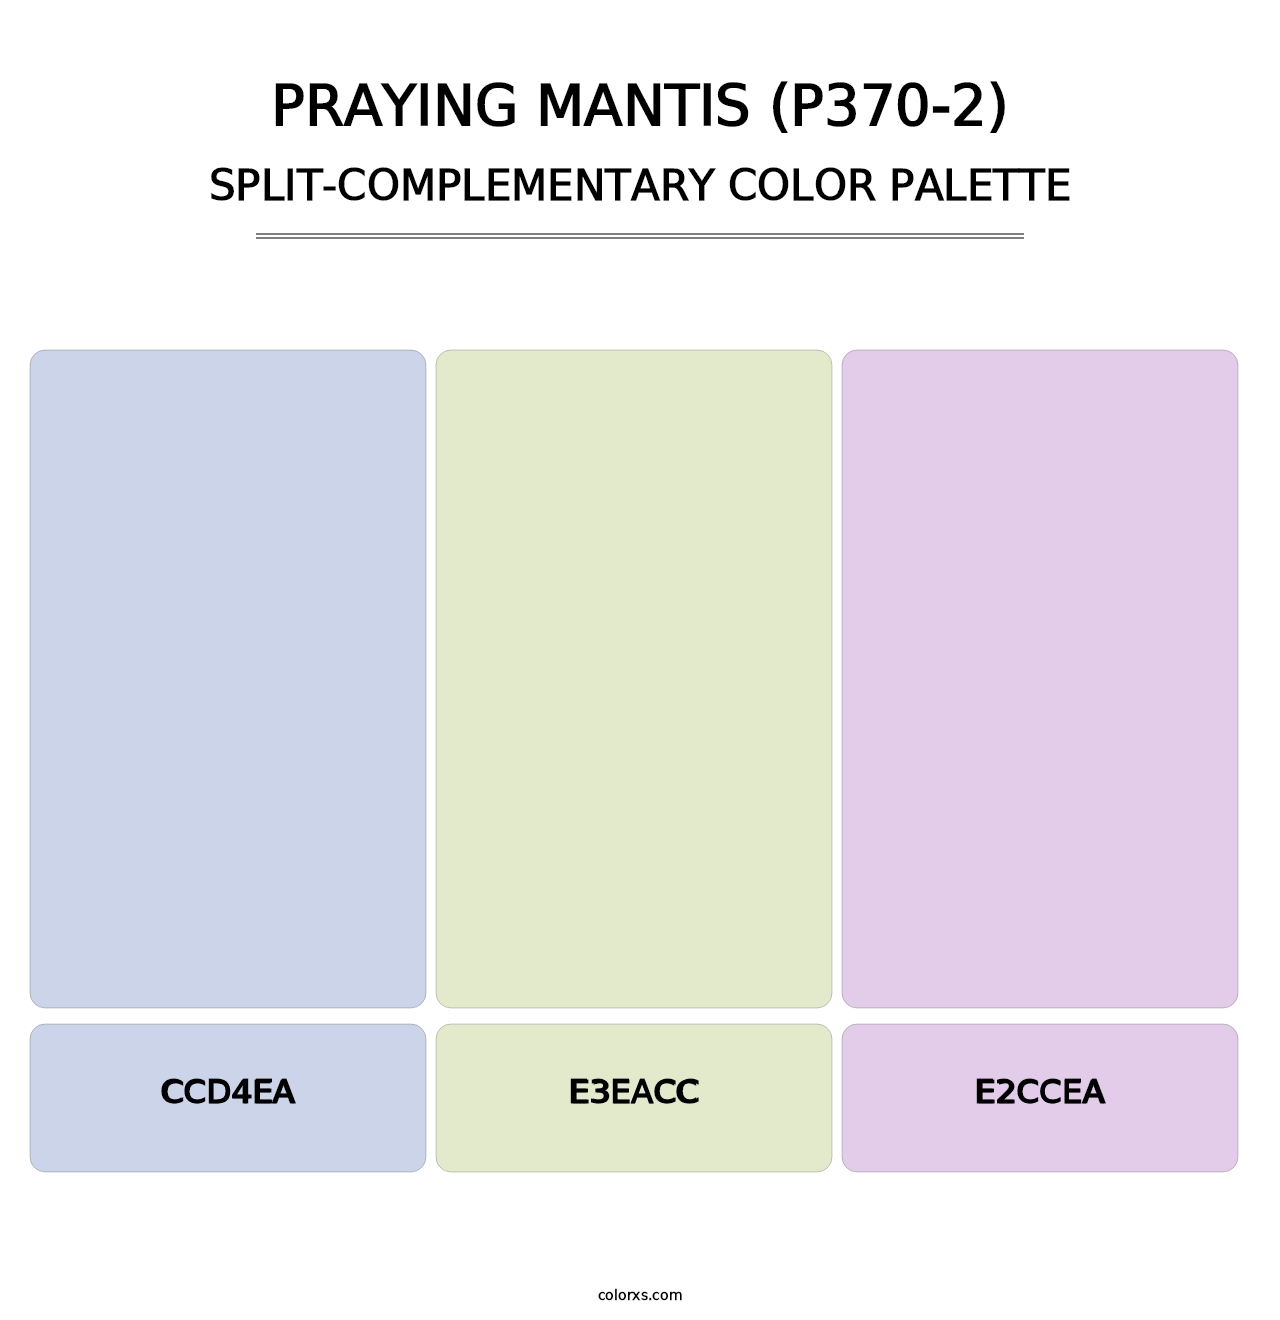 Praying Mantis (P370-2) - Split-Complementary Color Palette